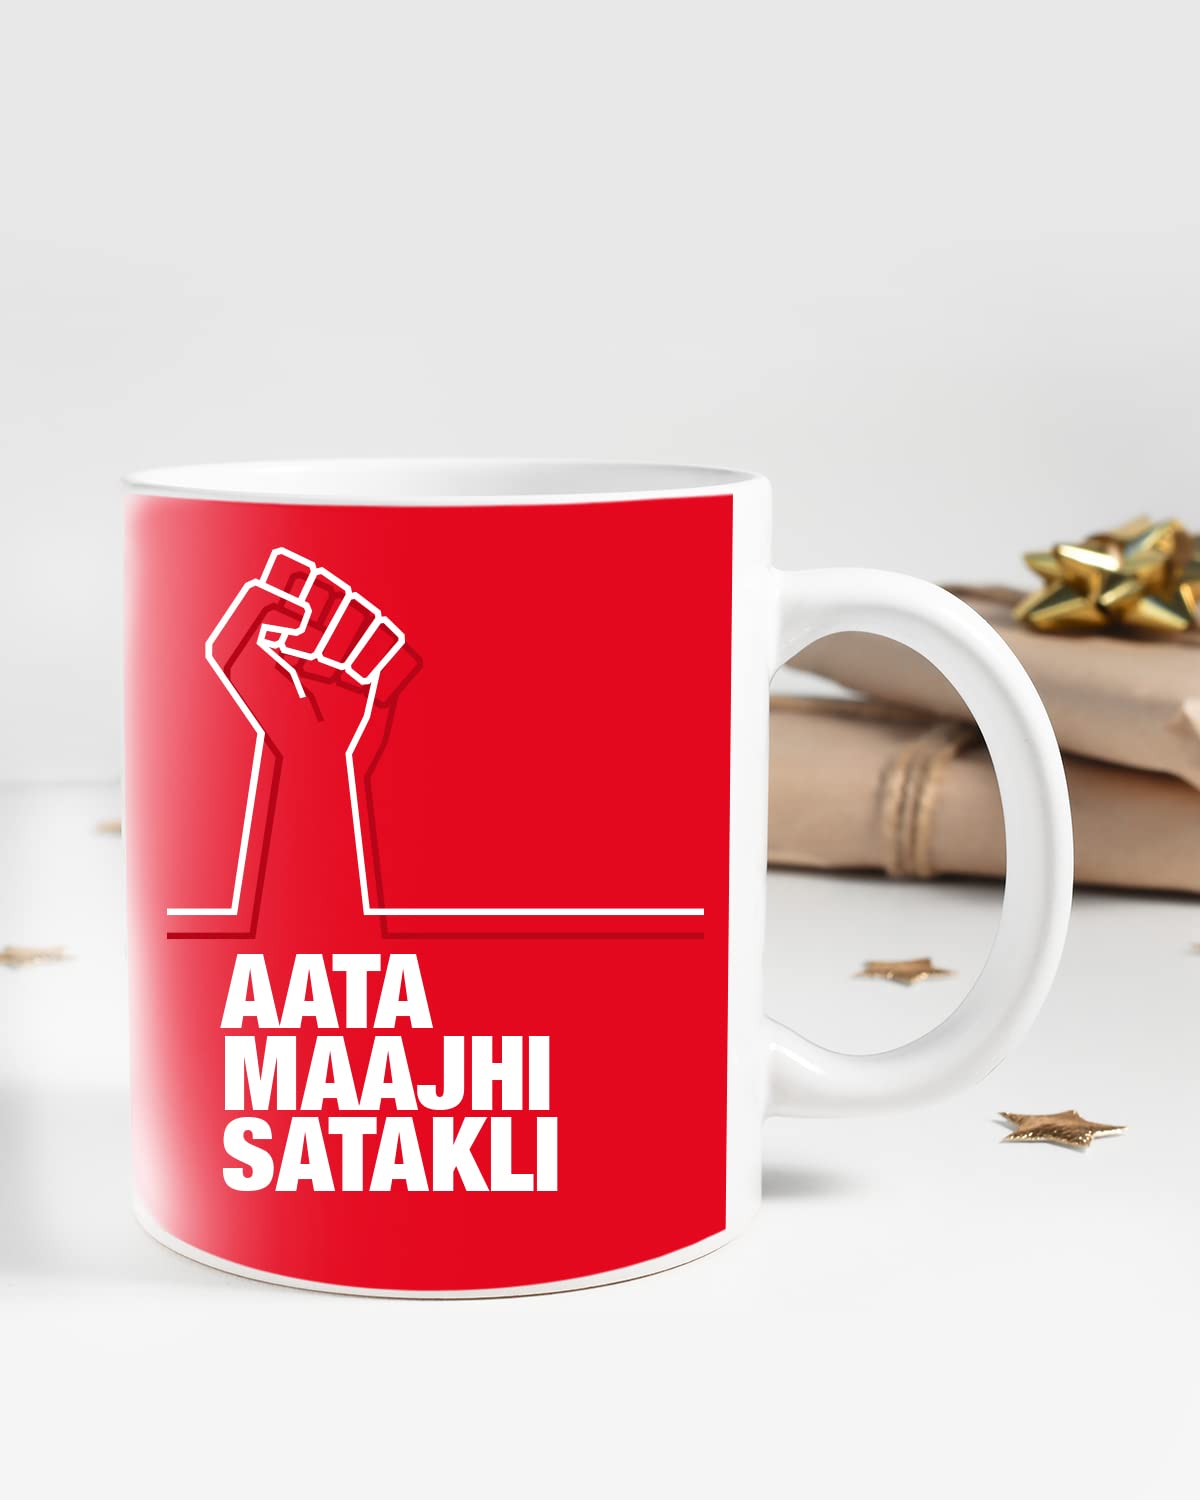 AATA MAAJHI SATAKLI Coffee Mug - Gift for Friend, Birthday Gift, Birthday Mug, Motivational Quotes Mug, Mugs with Funny & Funky Dialogues, Bollywood Mugs, Funny Mugs for Him & Her